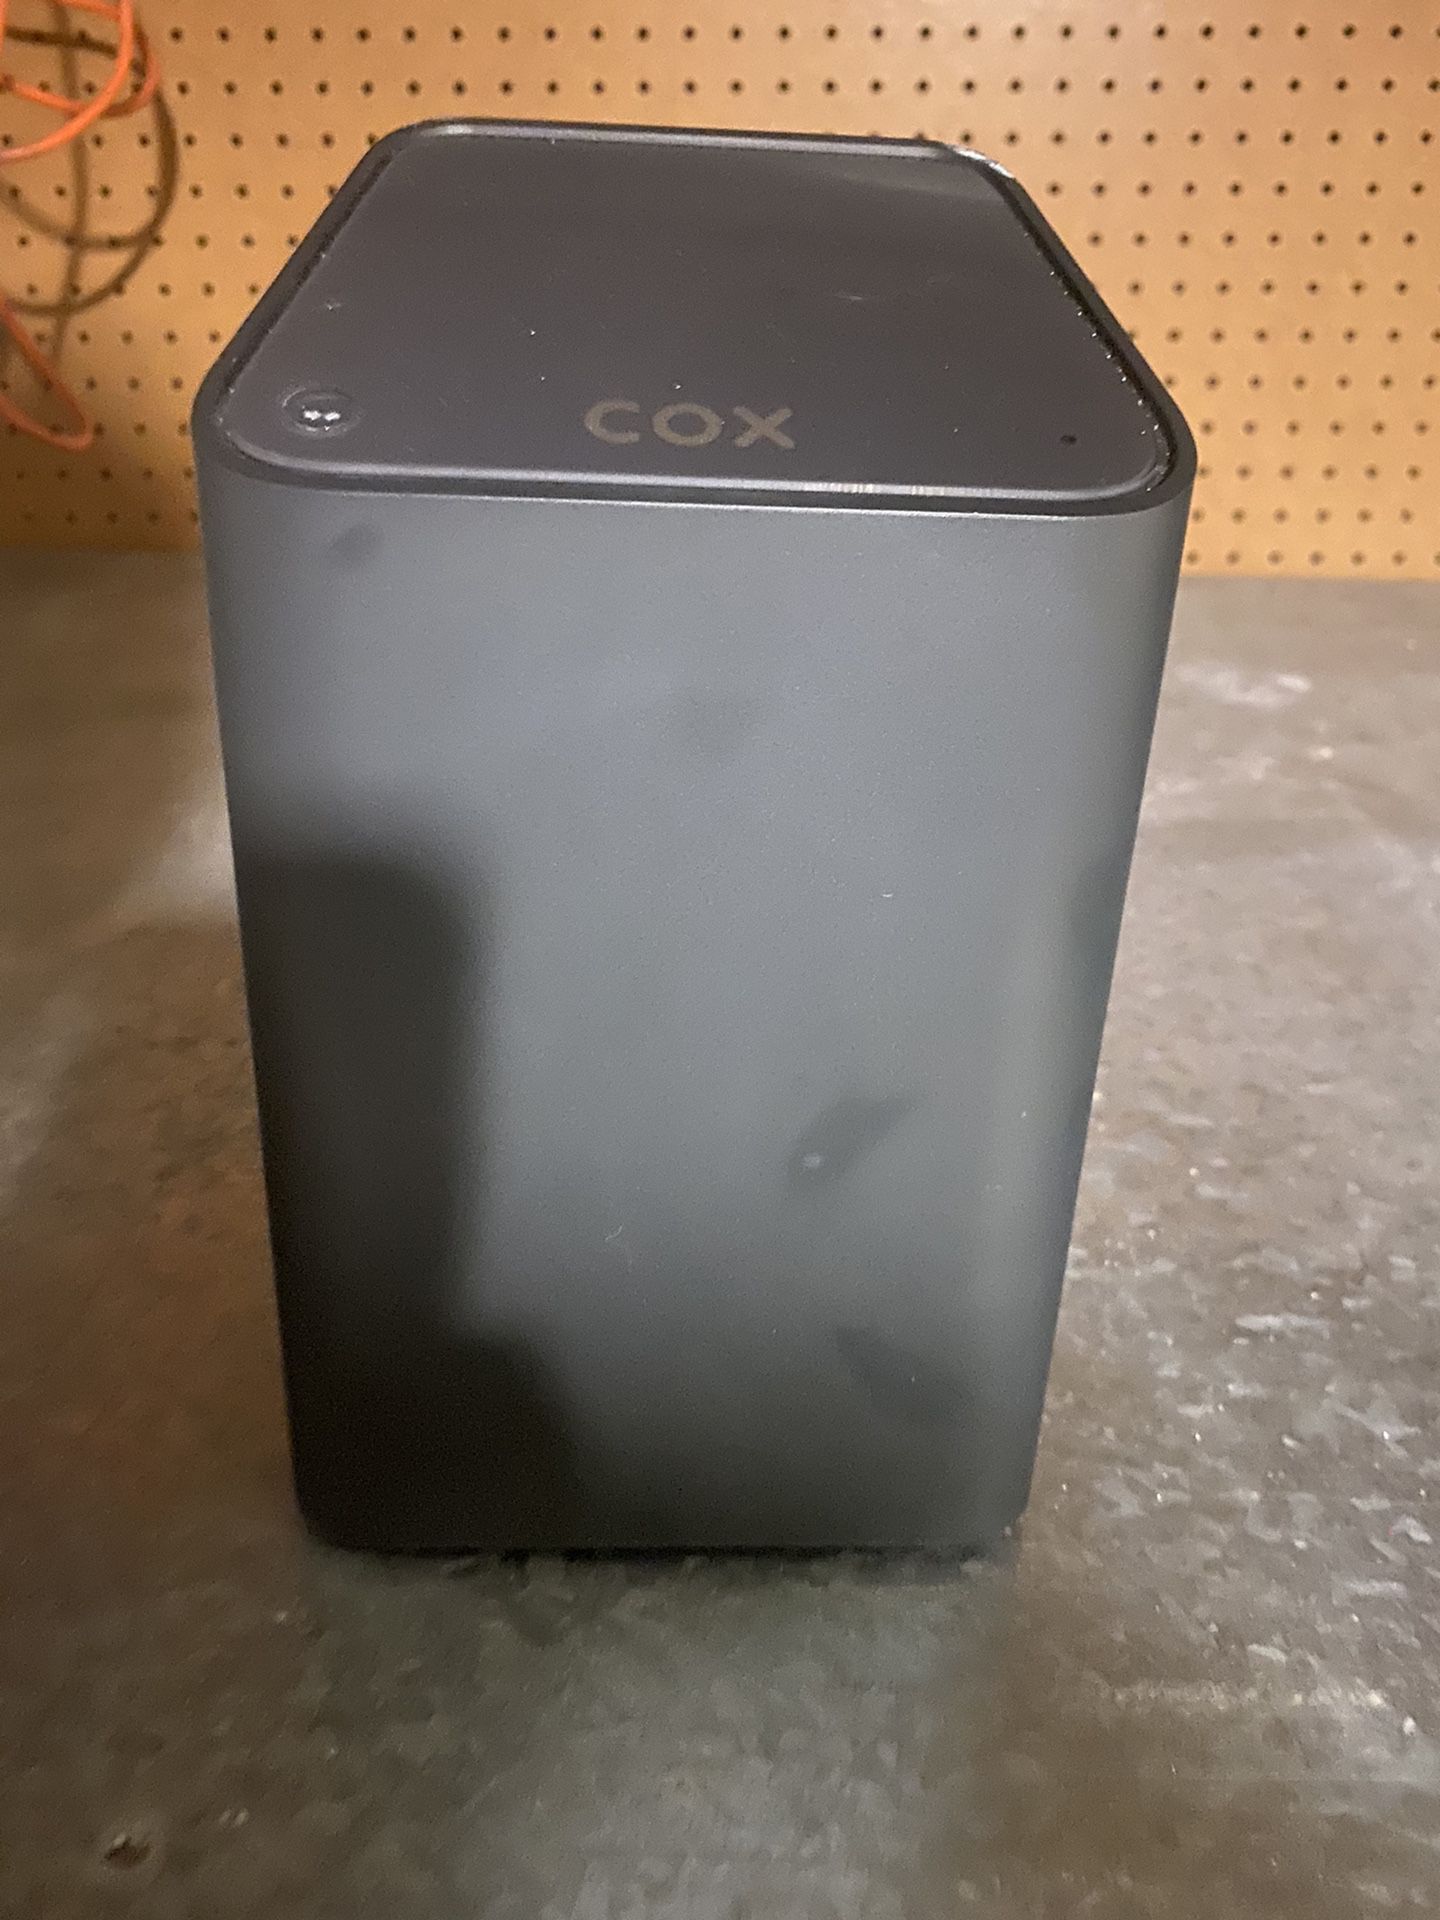 Cox comparable modem